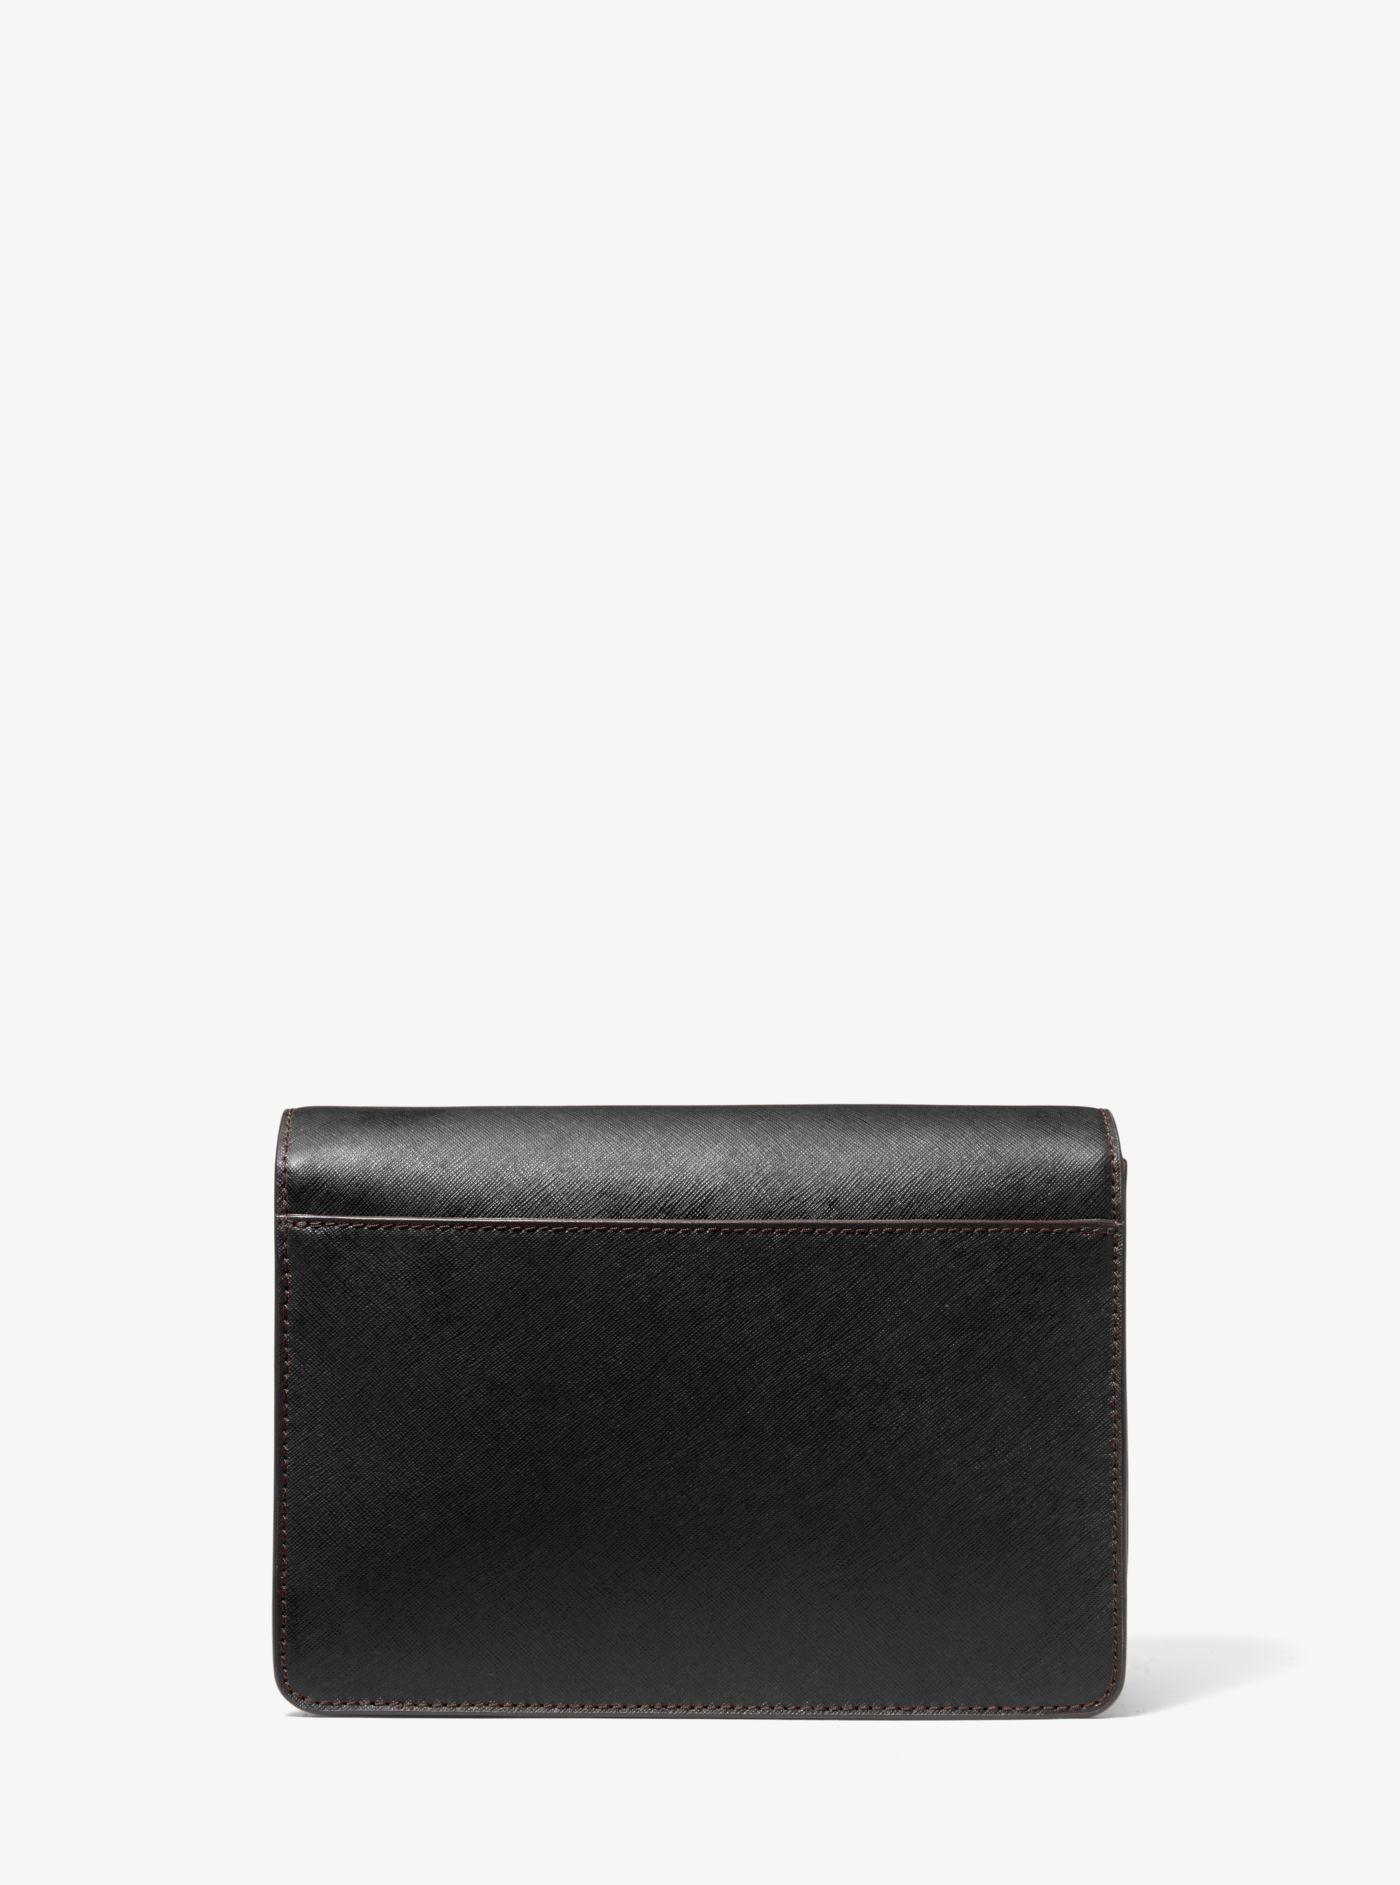 Michael Kors Daniela Large Saffiano Leather Crossbody Bag in Black | Lyst